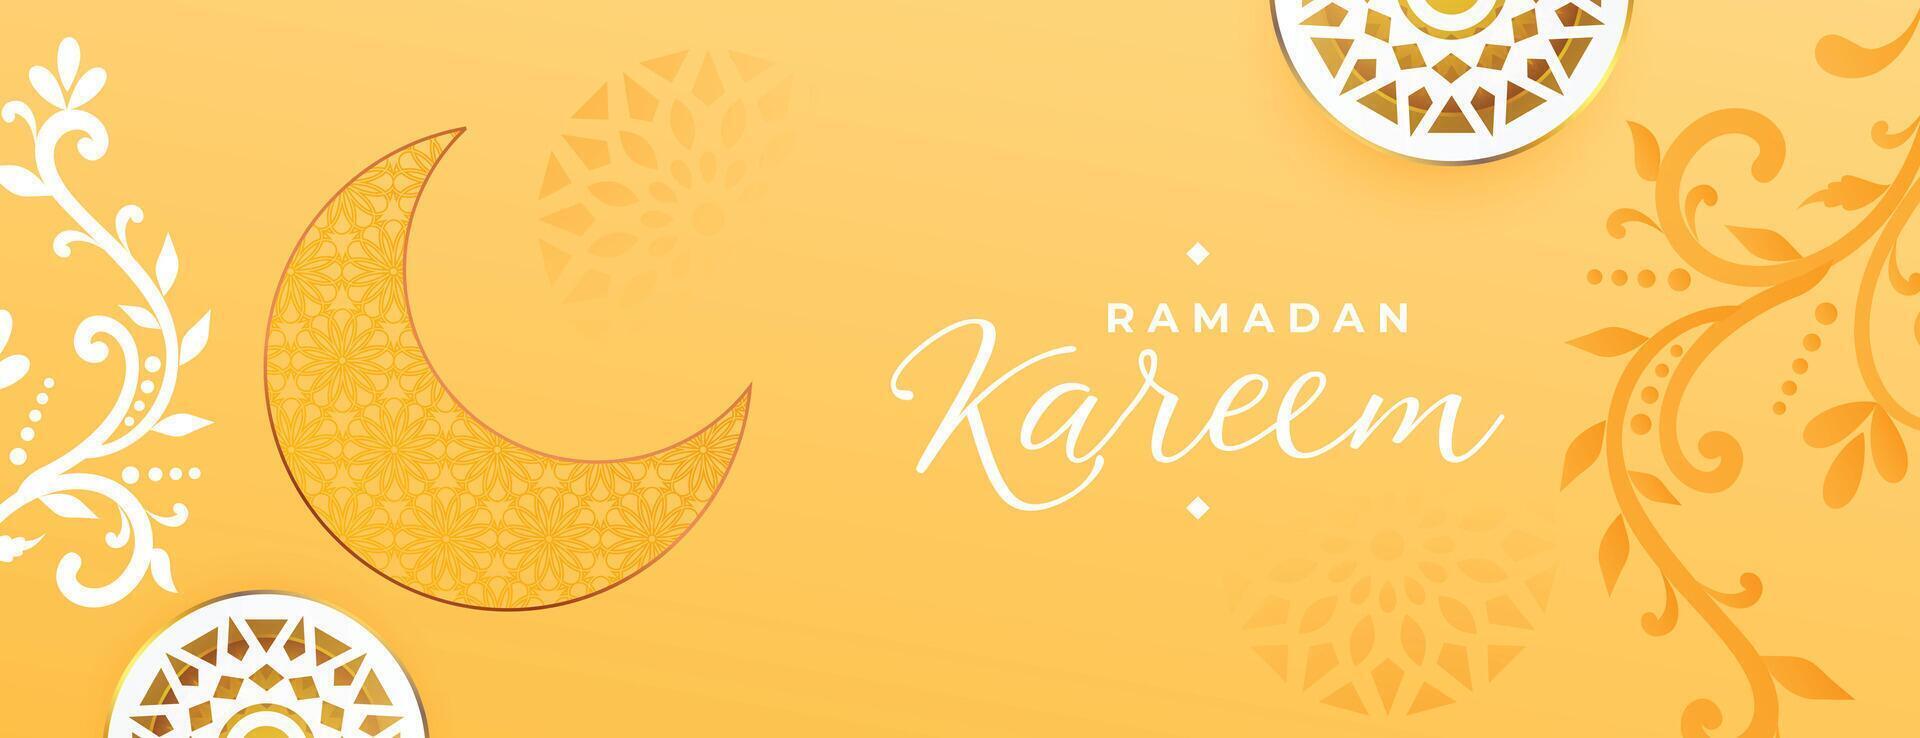 arabic decoration ramadan kareem moon and floral banner design vector